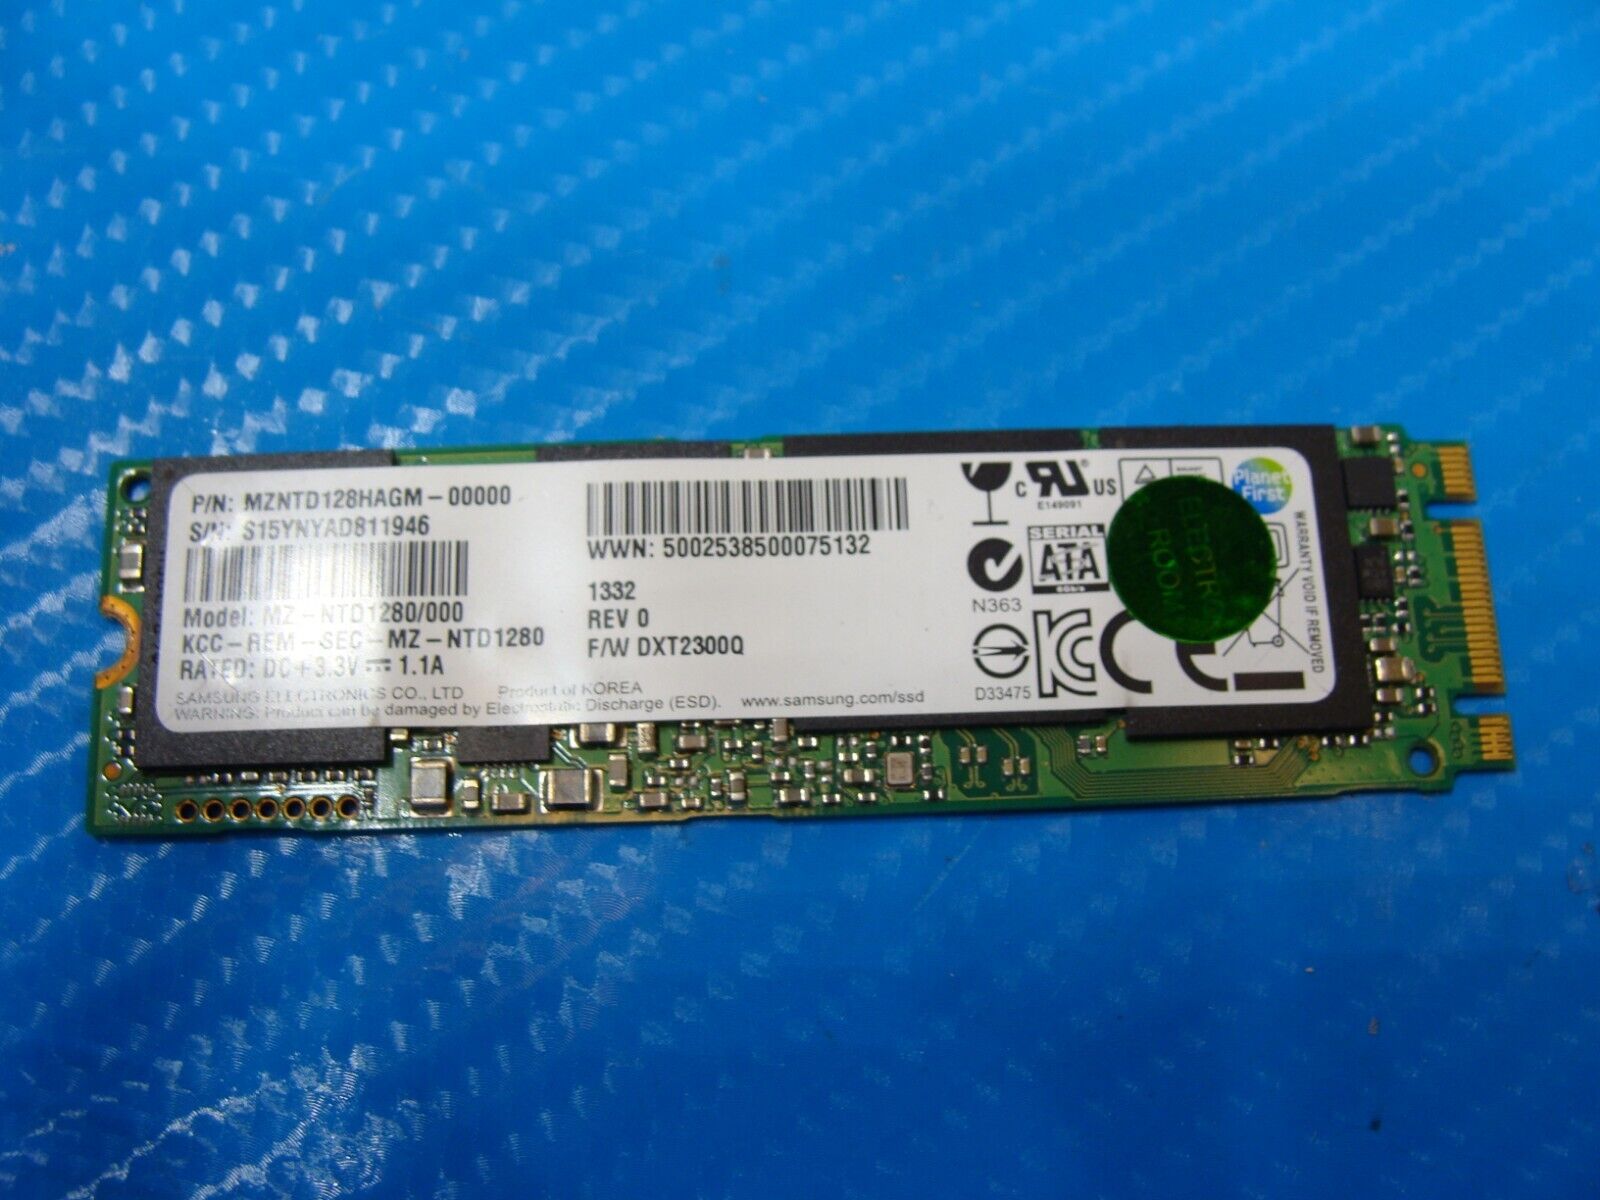 Acer AN515-53-52FA Samsung 128Gb Sata M.2 SSDSolid State Drive MZ-NTD1280/000